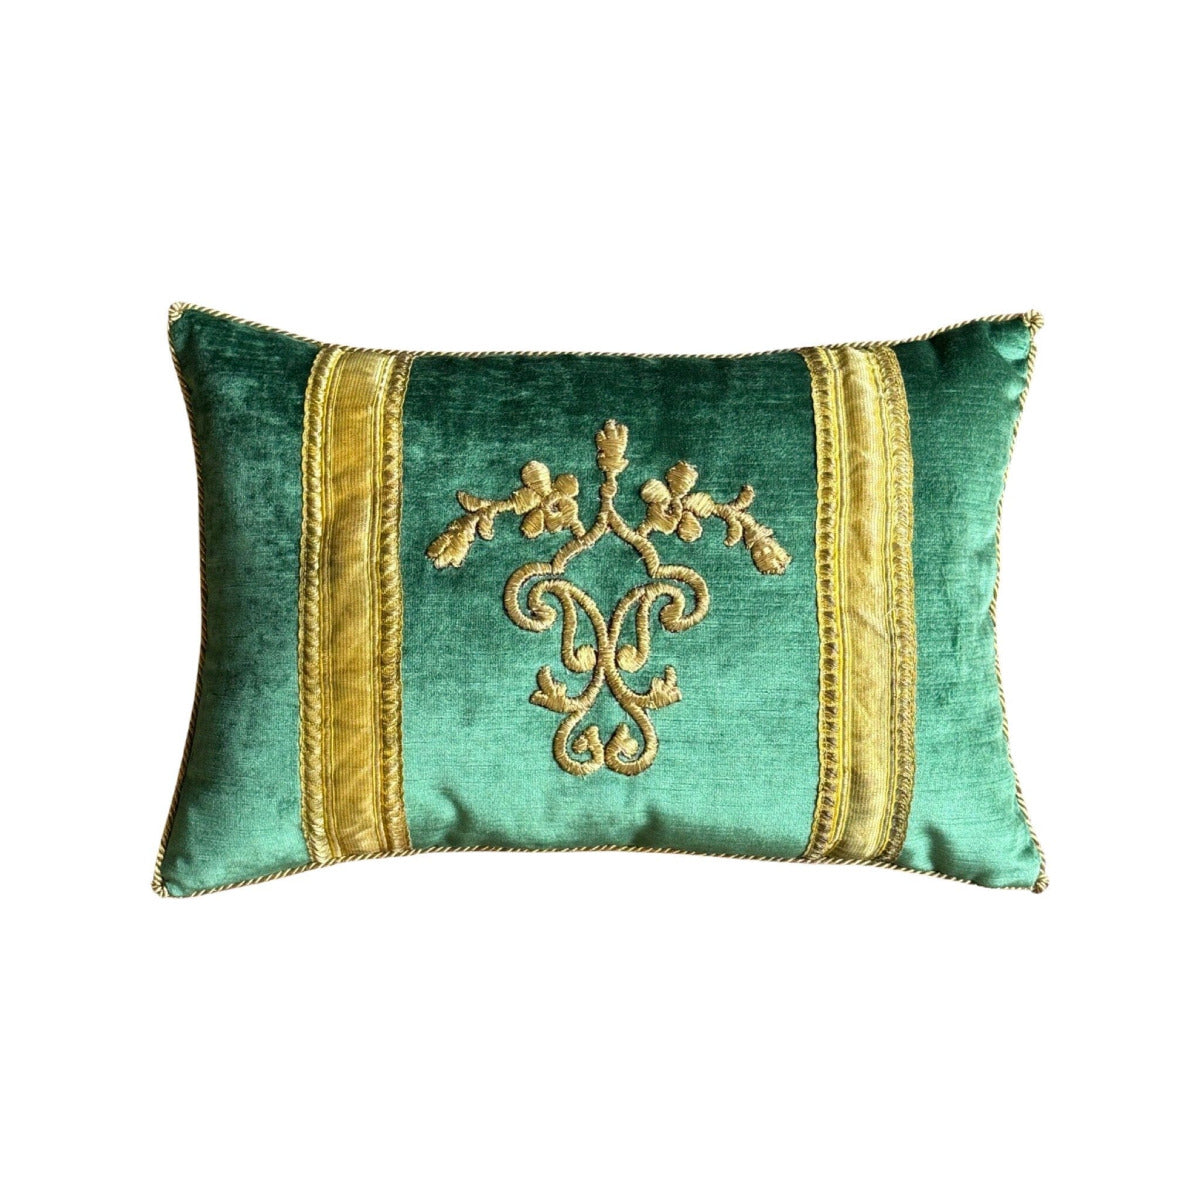 Antique Ottoman Empire Raised Gold Metallic Embroidery (#E021524 | 11 1/2 x 17